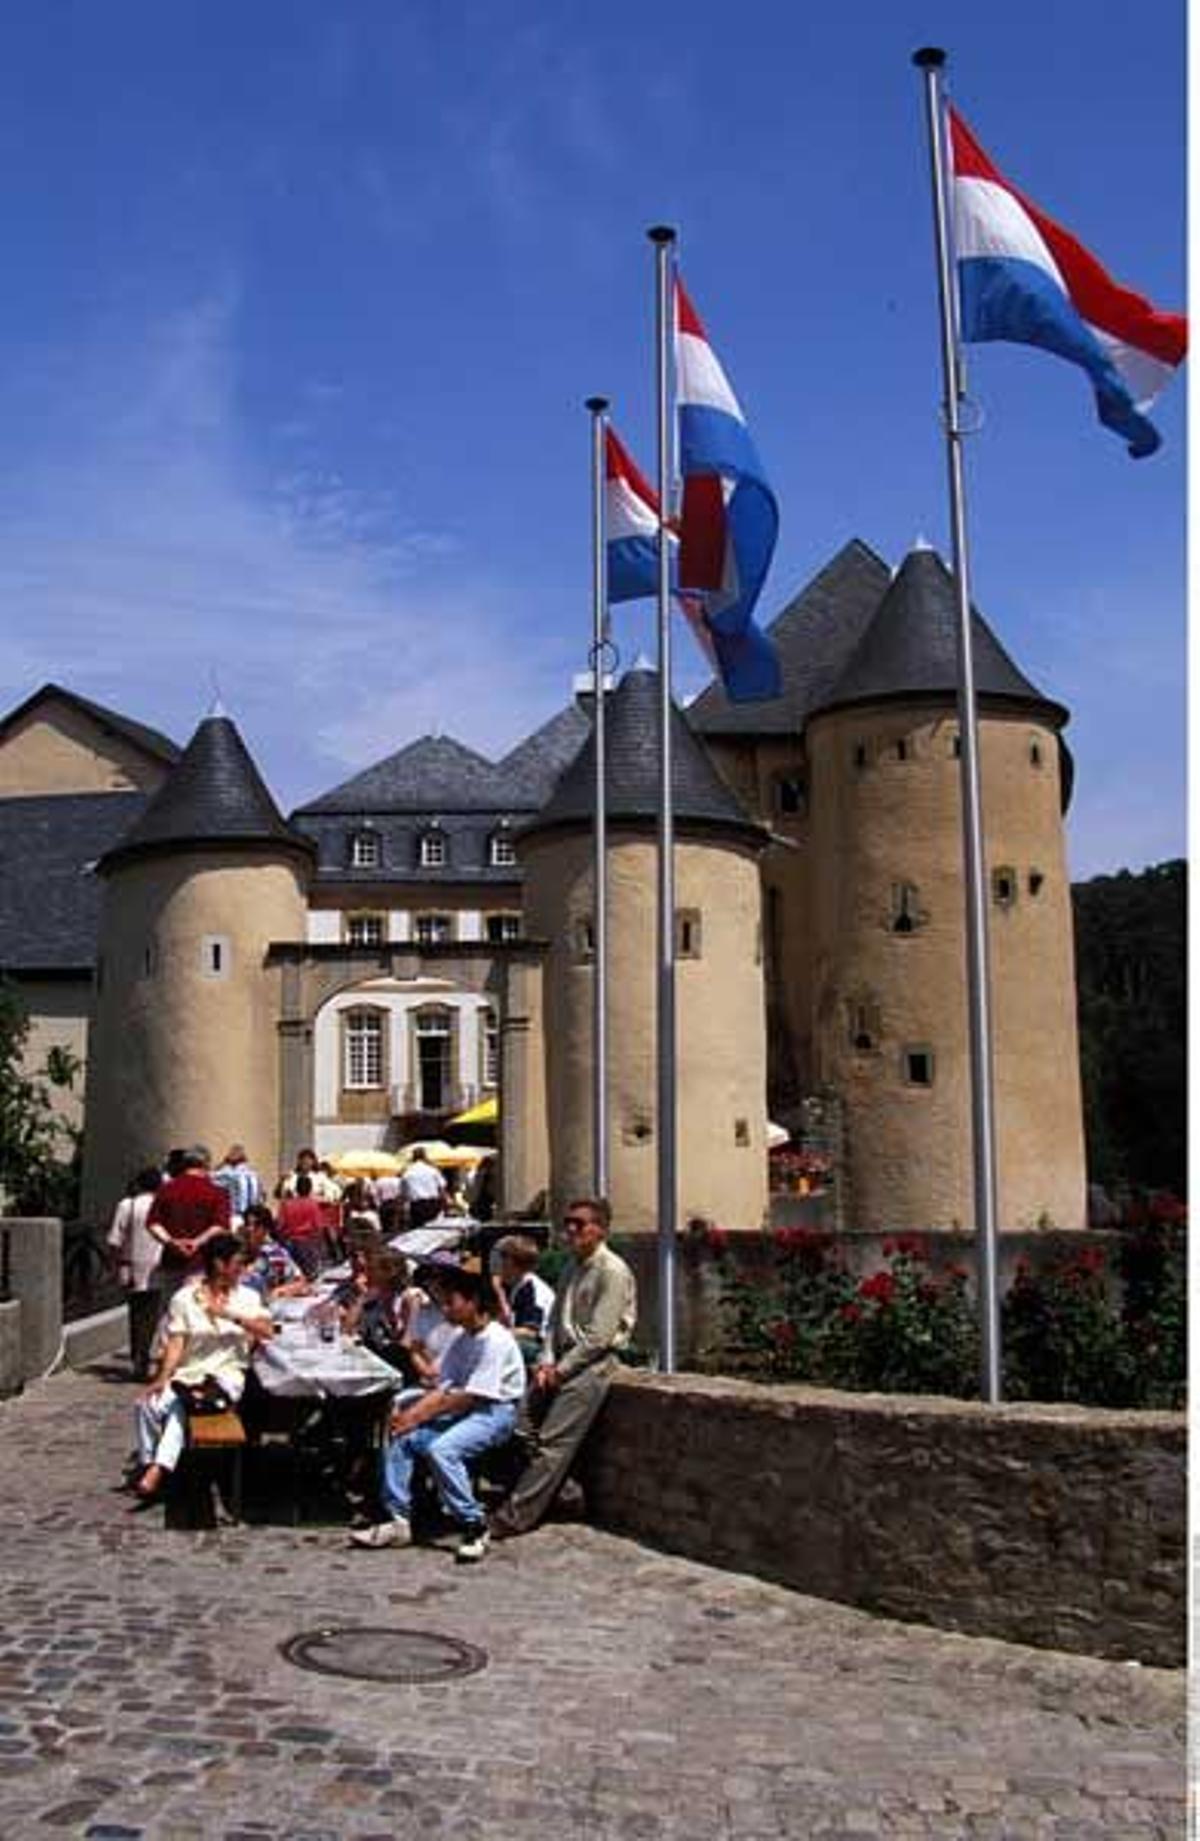 Castillo de Bourglinster en Luxemburgo.